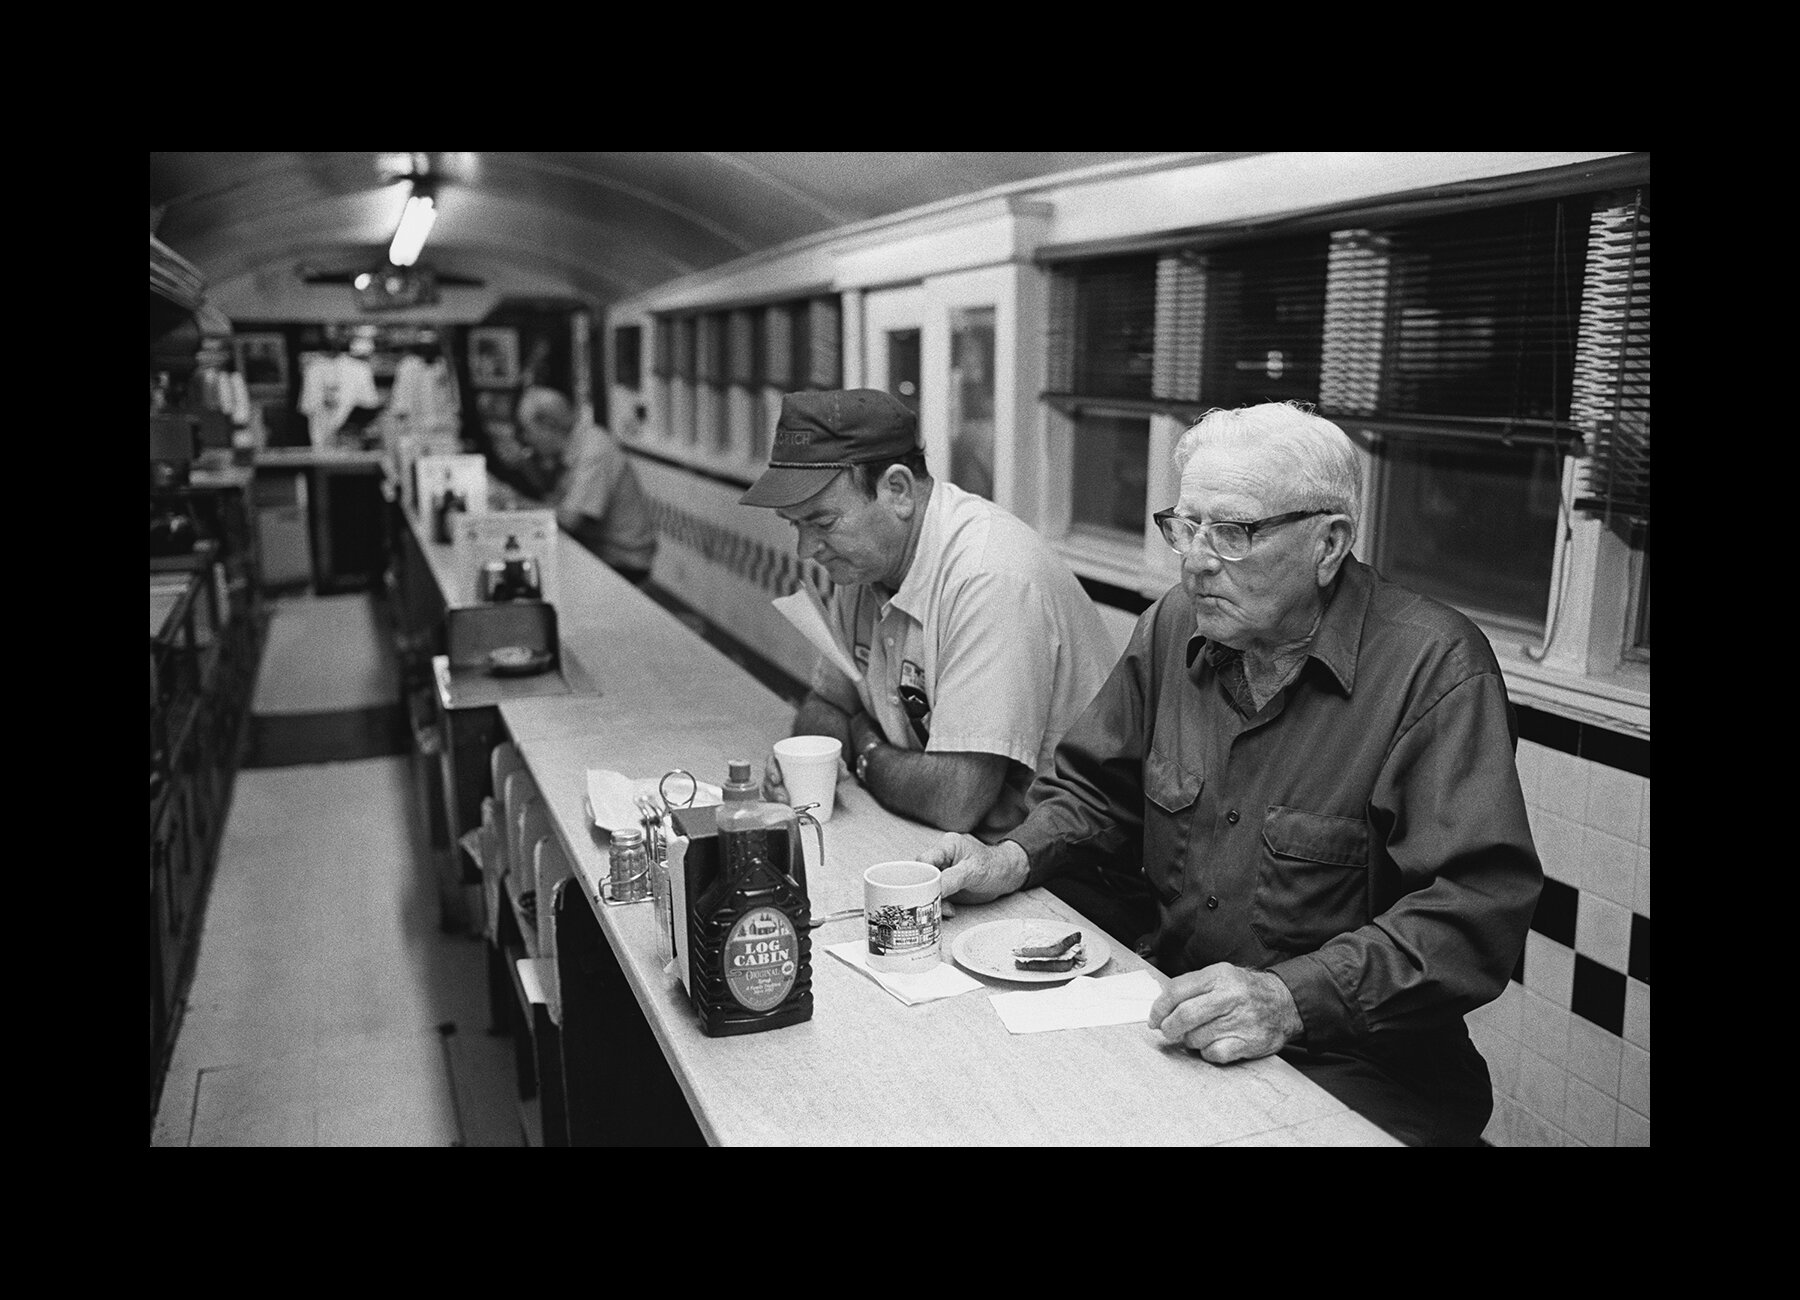  Walter Burnette, 90, eats at the Hillsville Diner every morning at 4:45 am, like clockwork. Austinsville, Virginia. 2001  